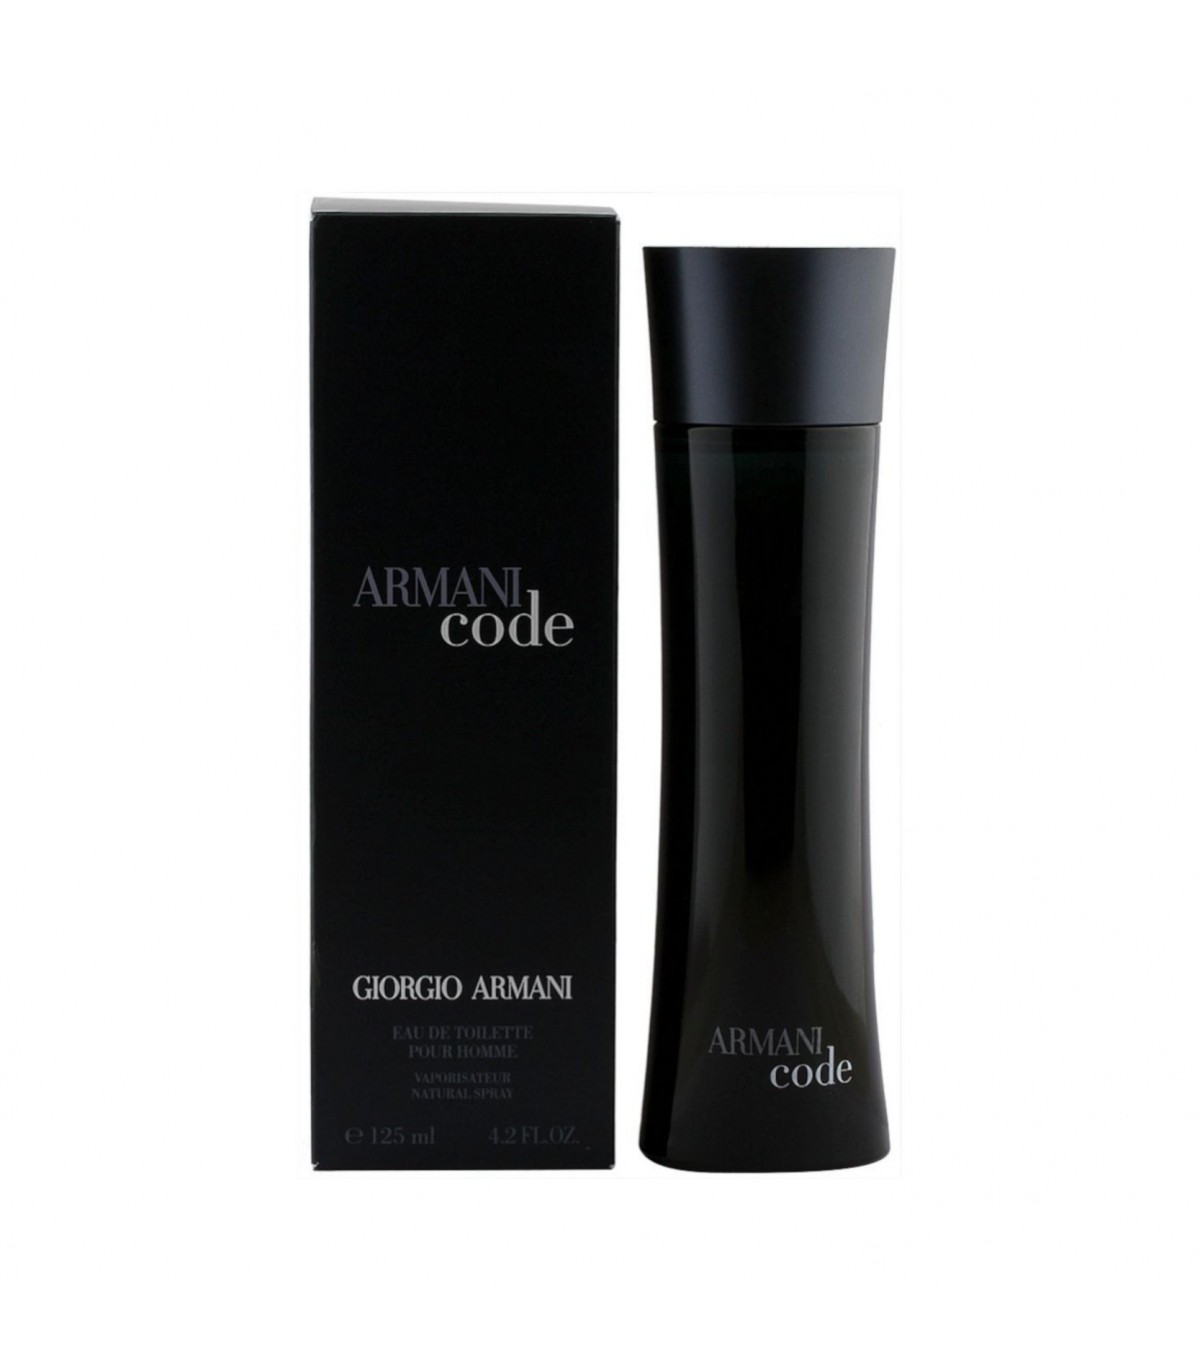 Armani code homme. Armani code подарочный набор мужской.